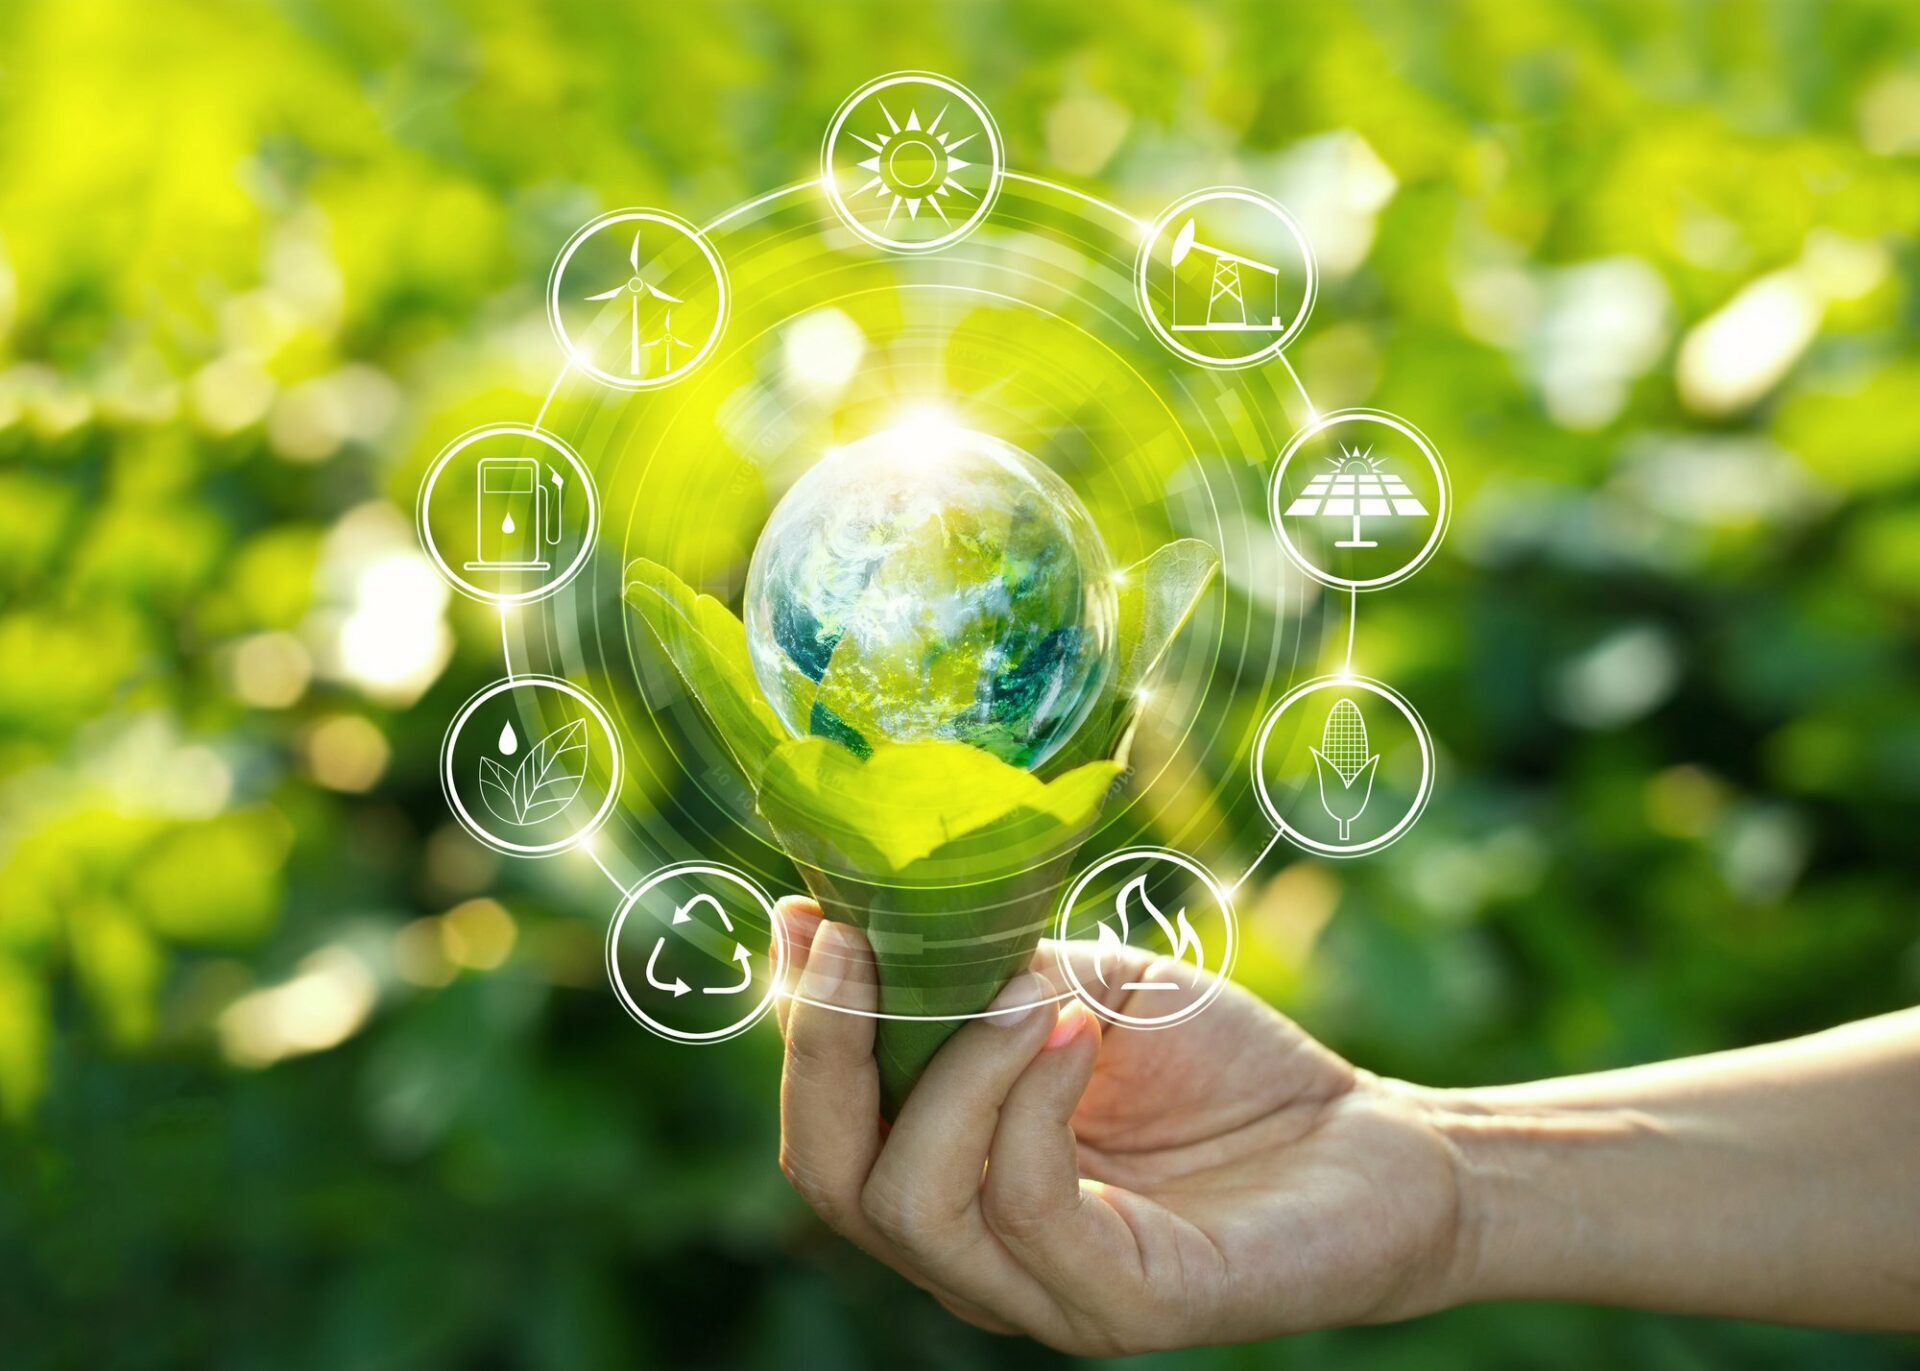 Worldsensing among 100 companies embracing circular economy practices